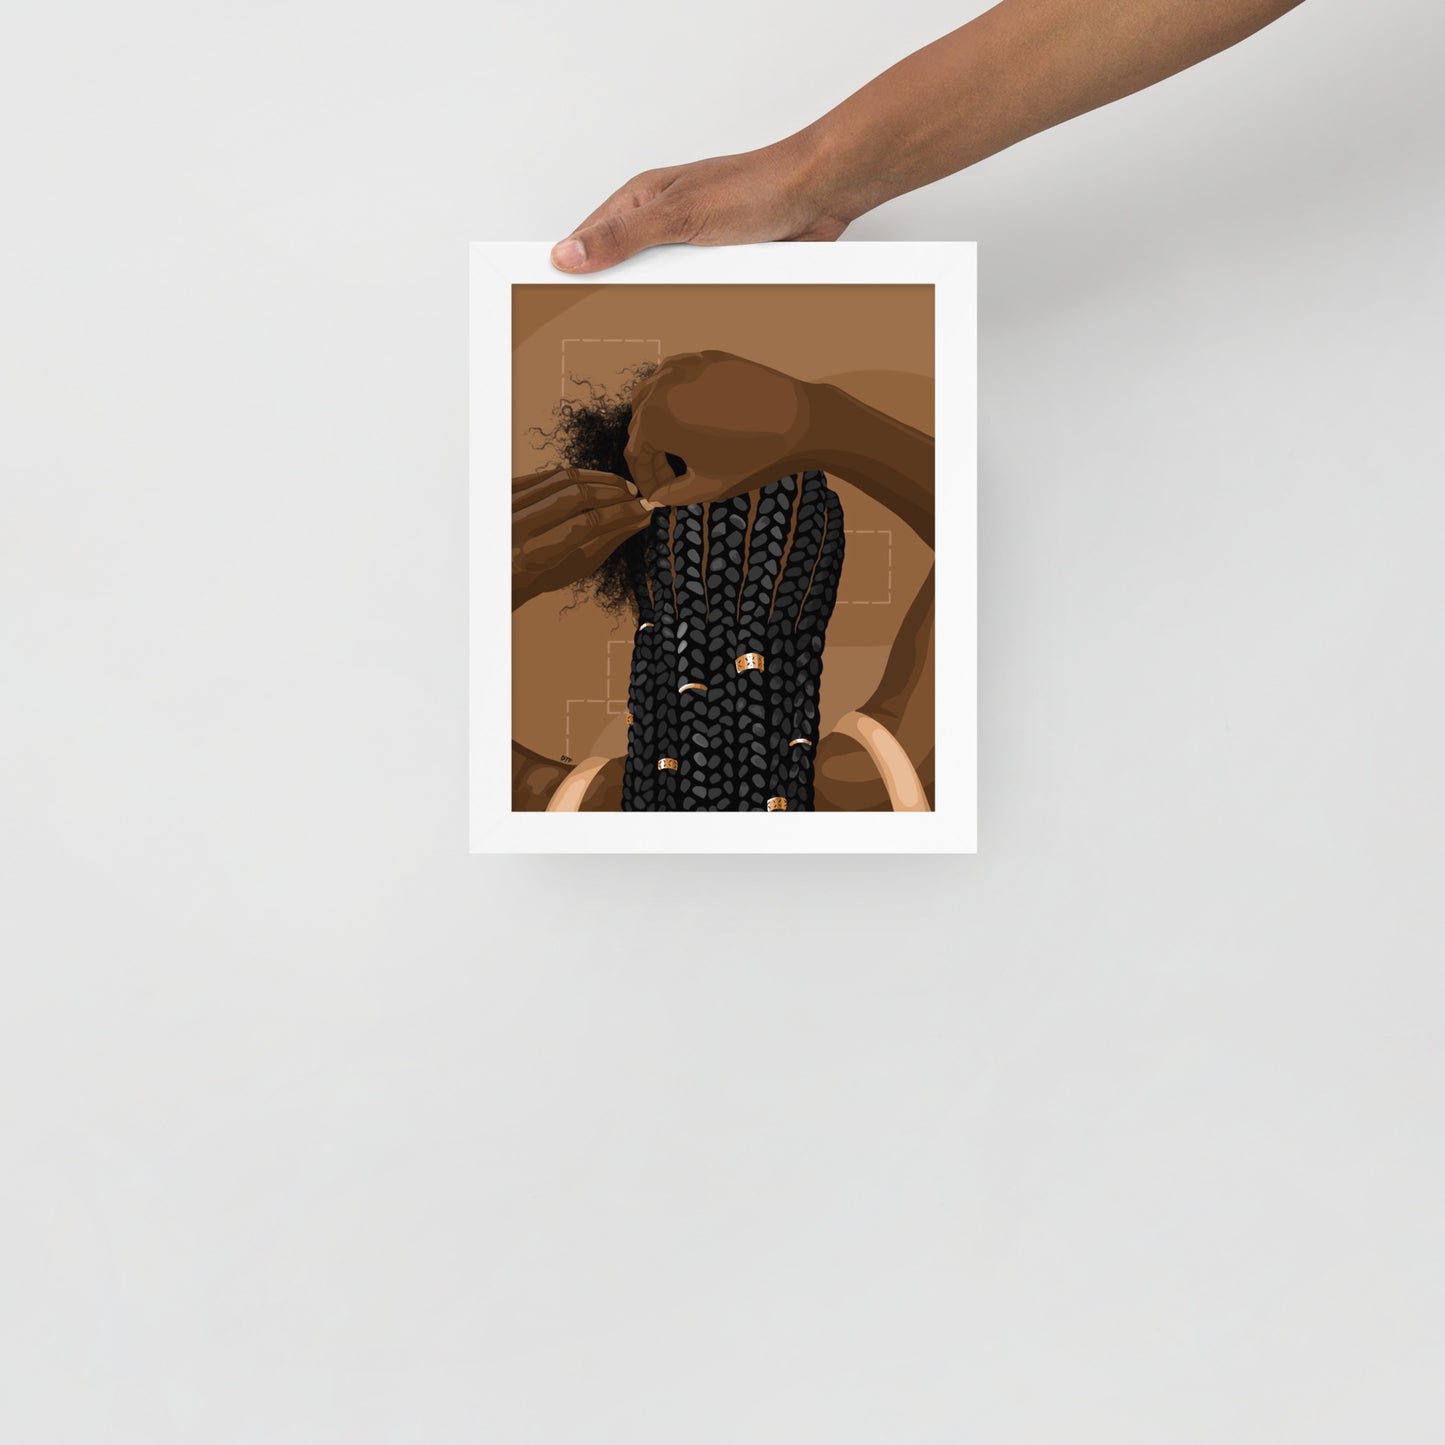 “Category is Hair” Framed Print